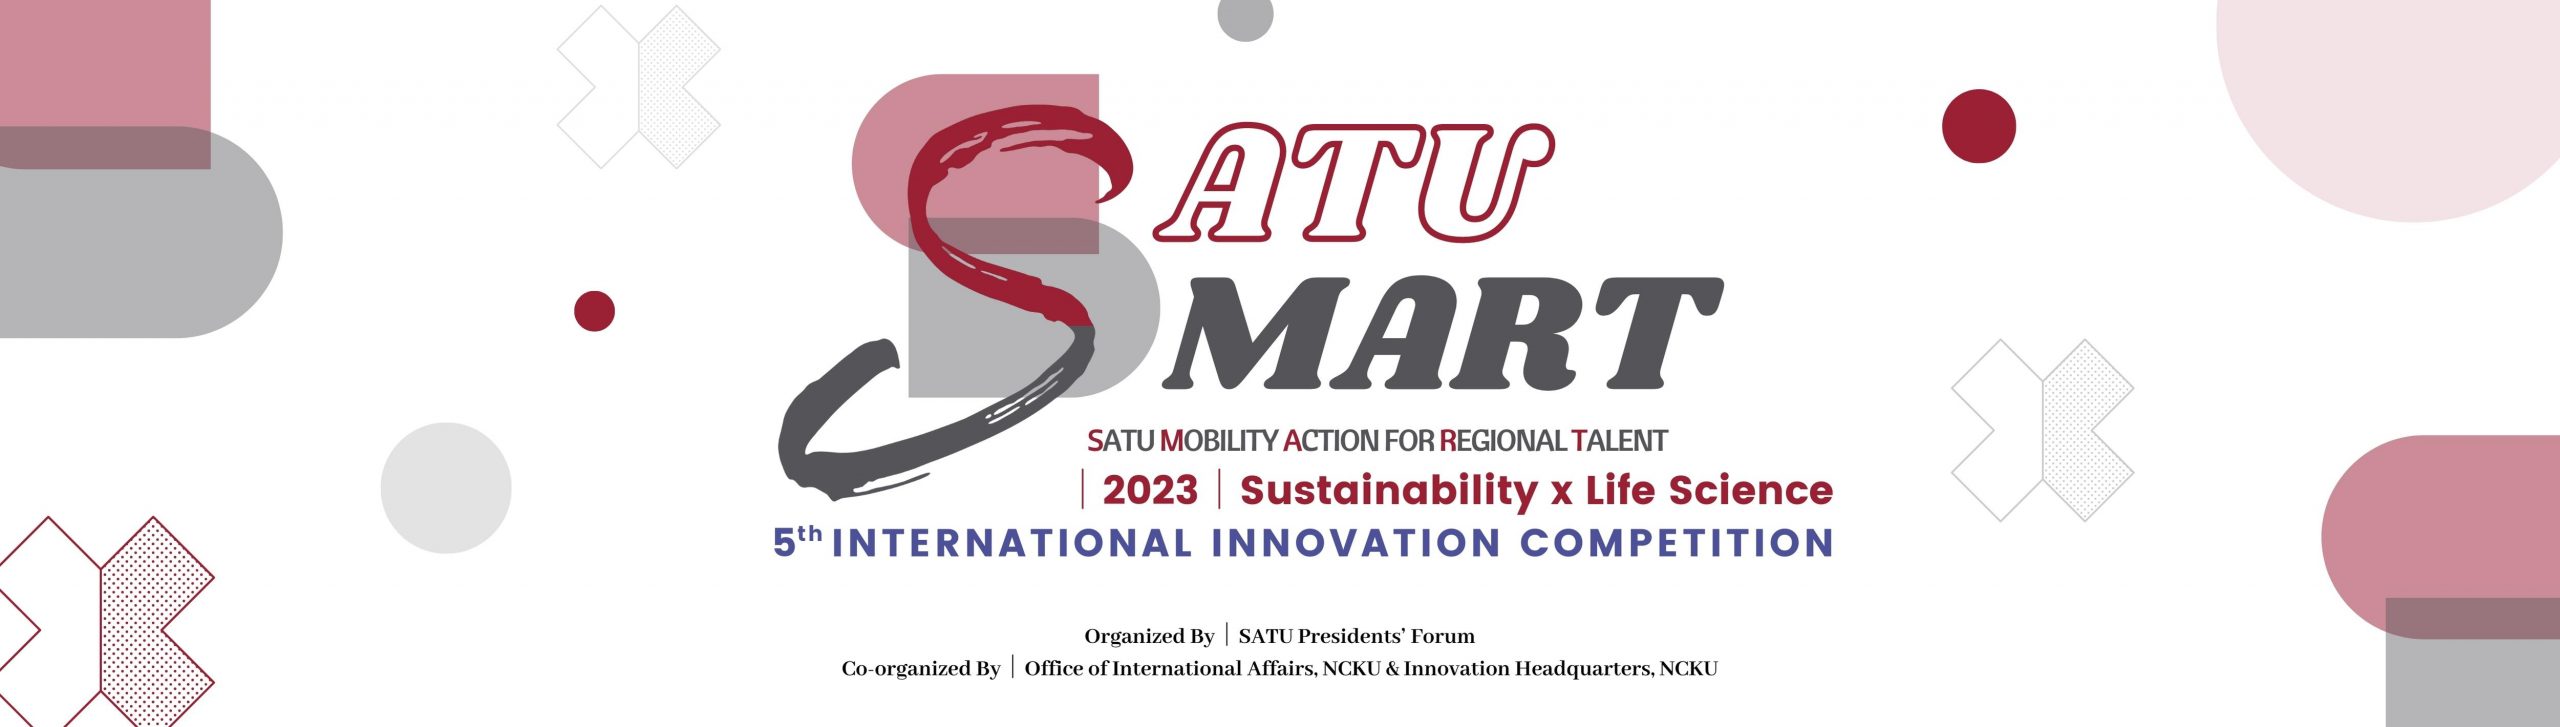 2023 SATU SMART 5th International Innovation Competition